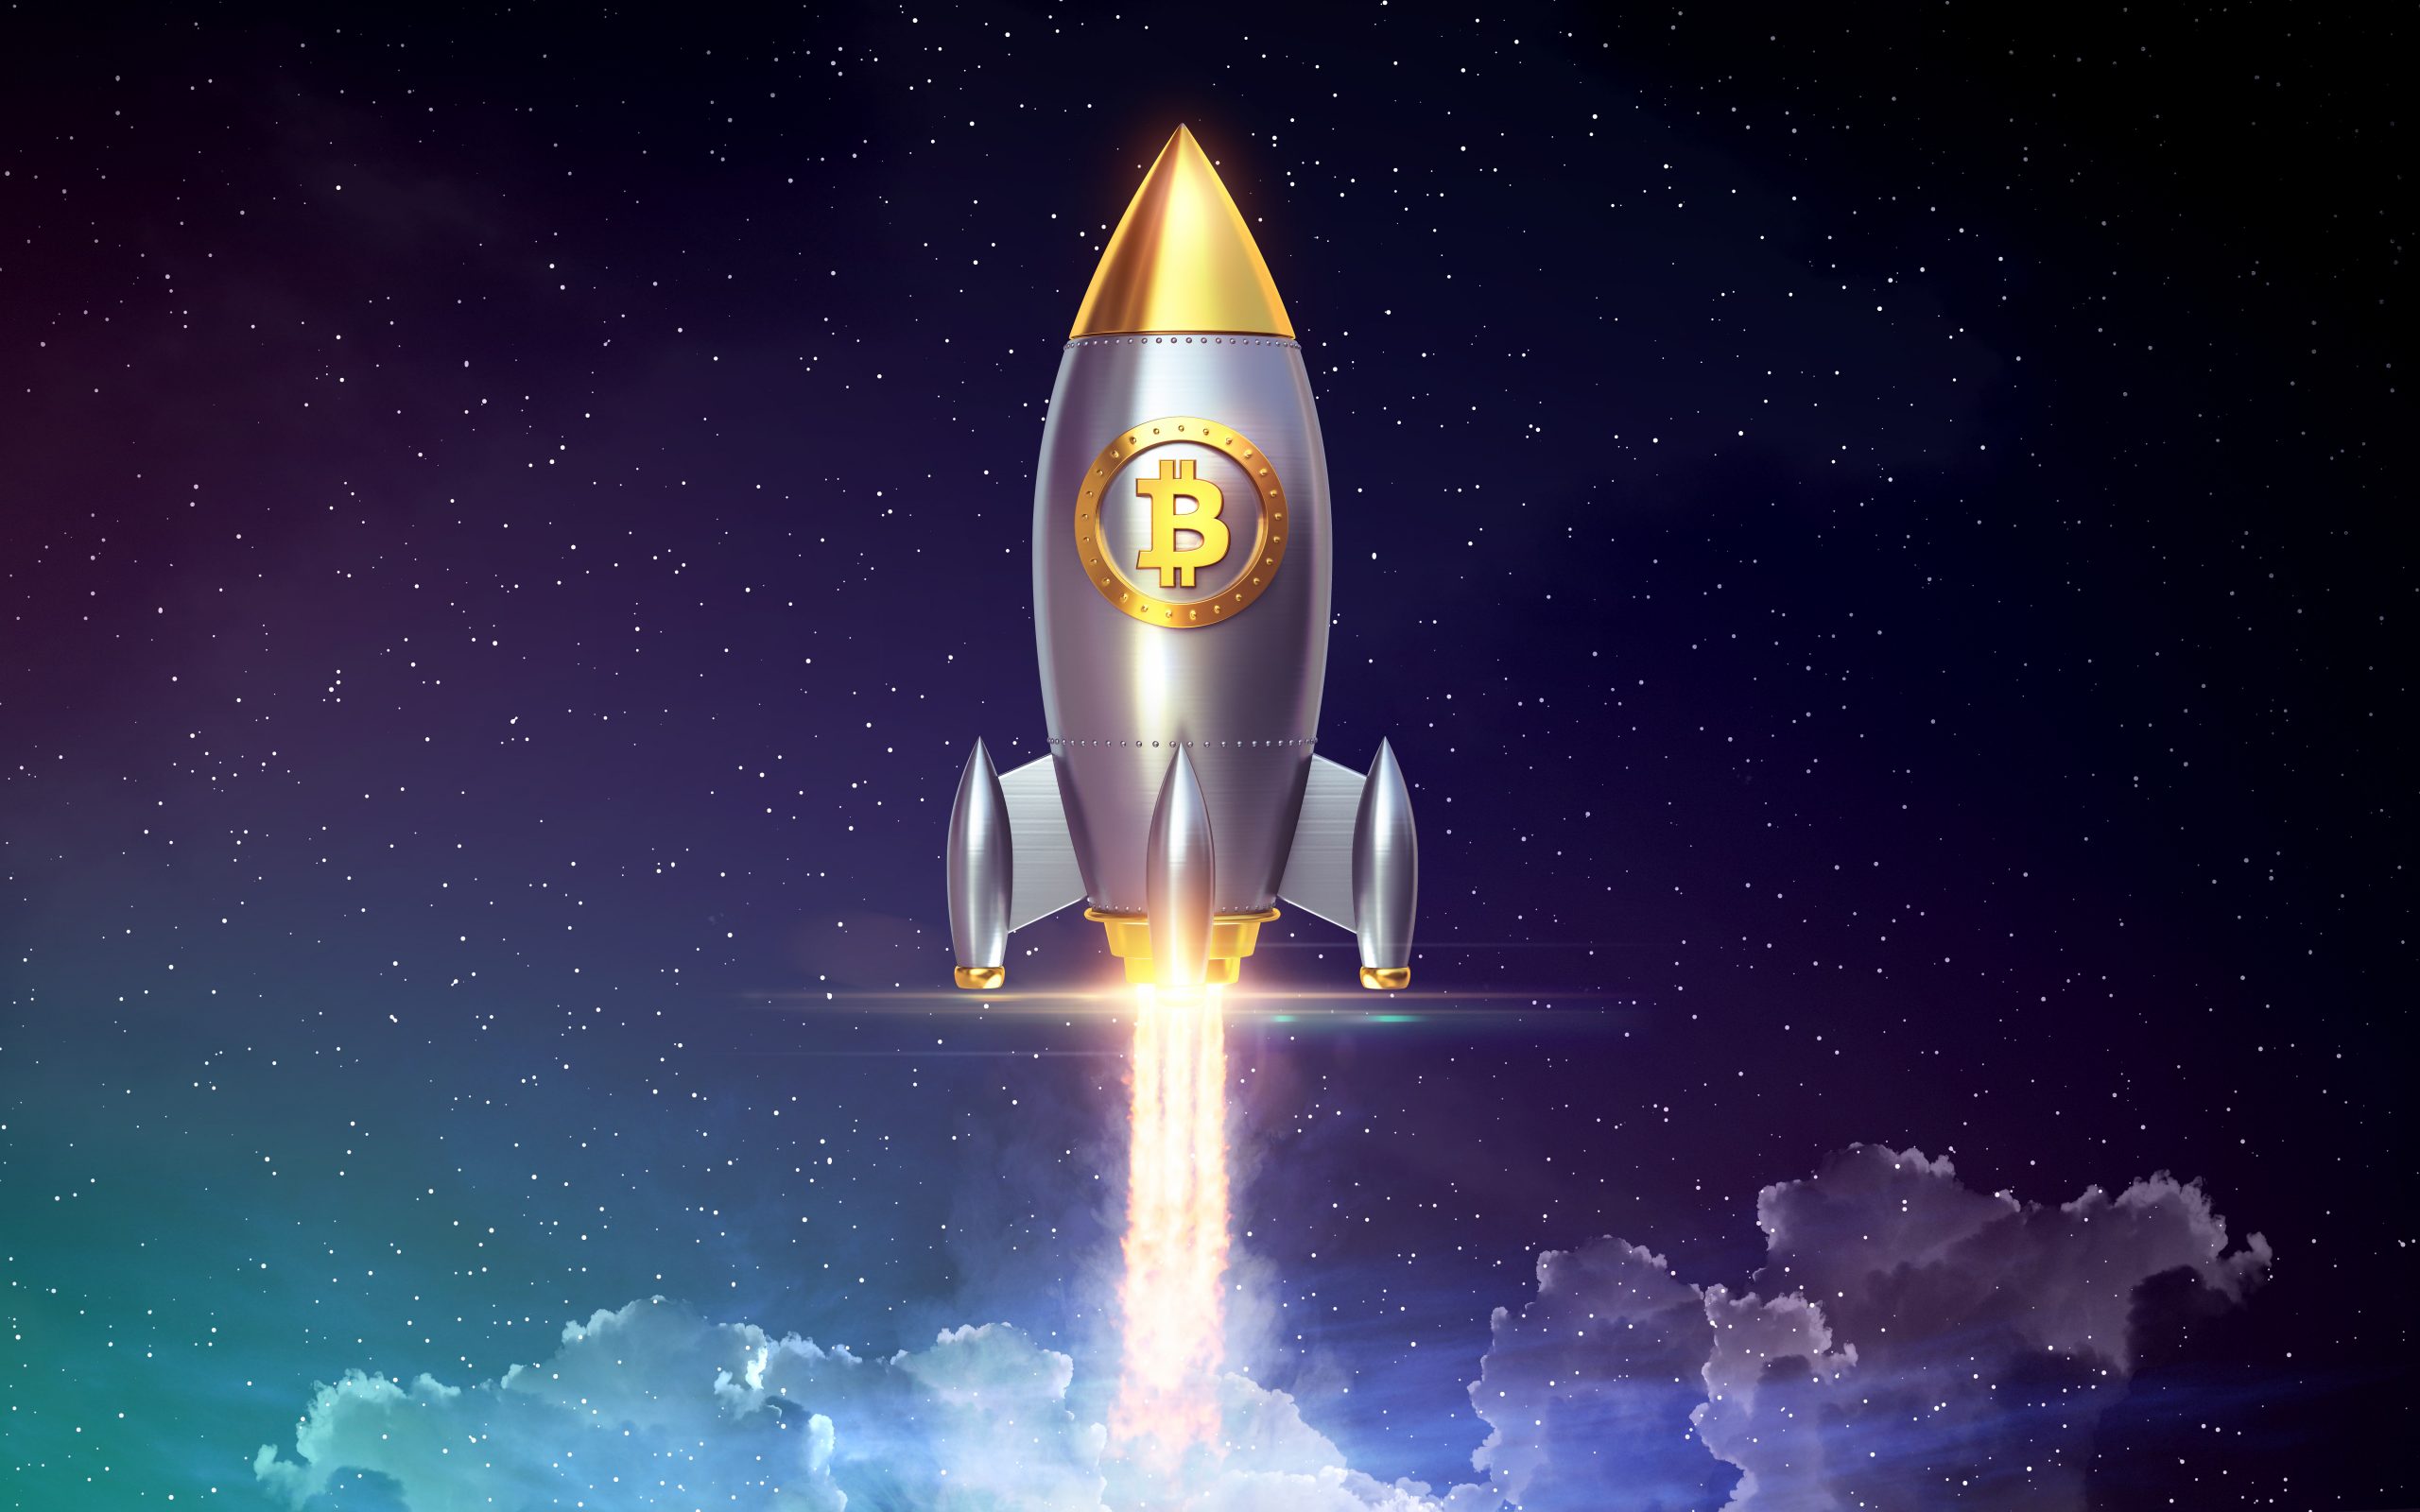 Rocket blasting off with bitcoin symbol